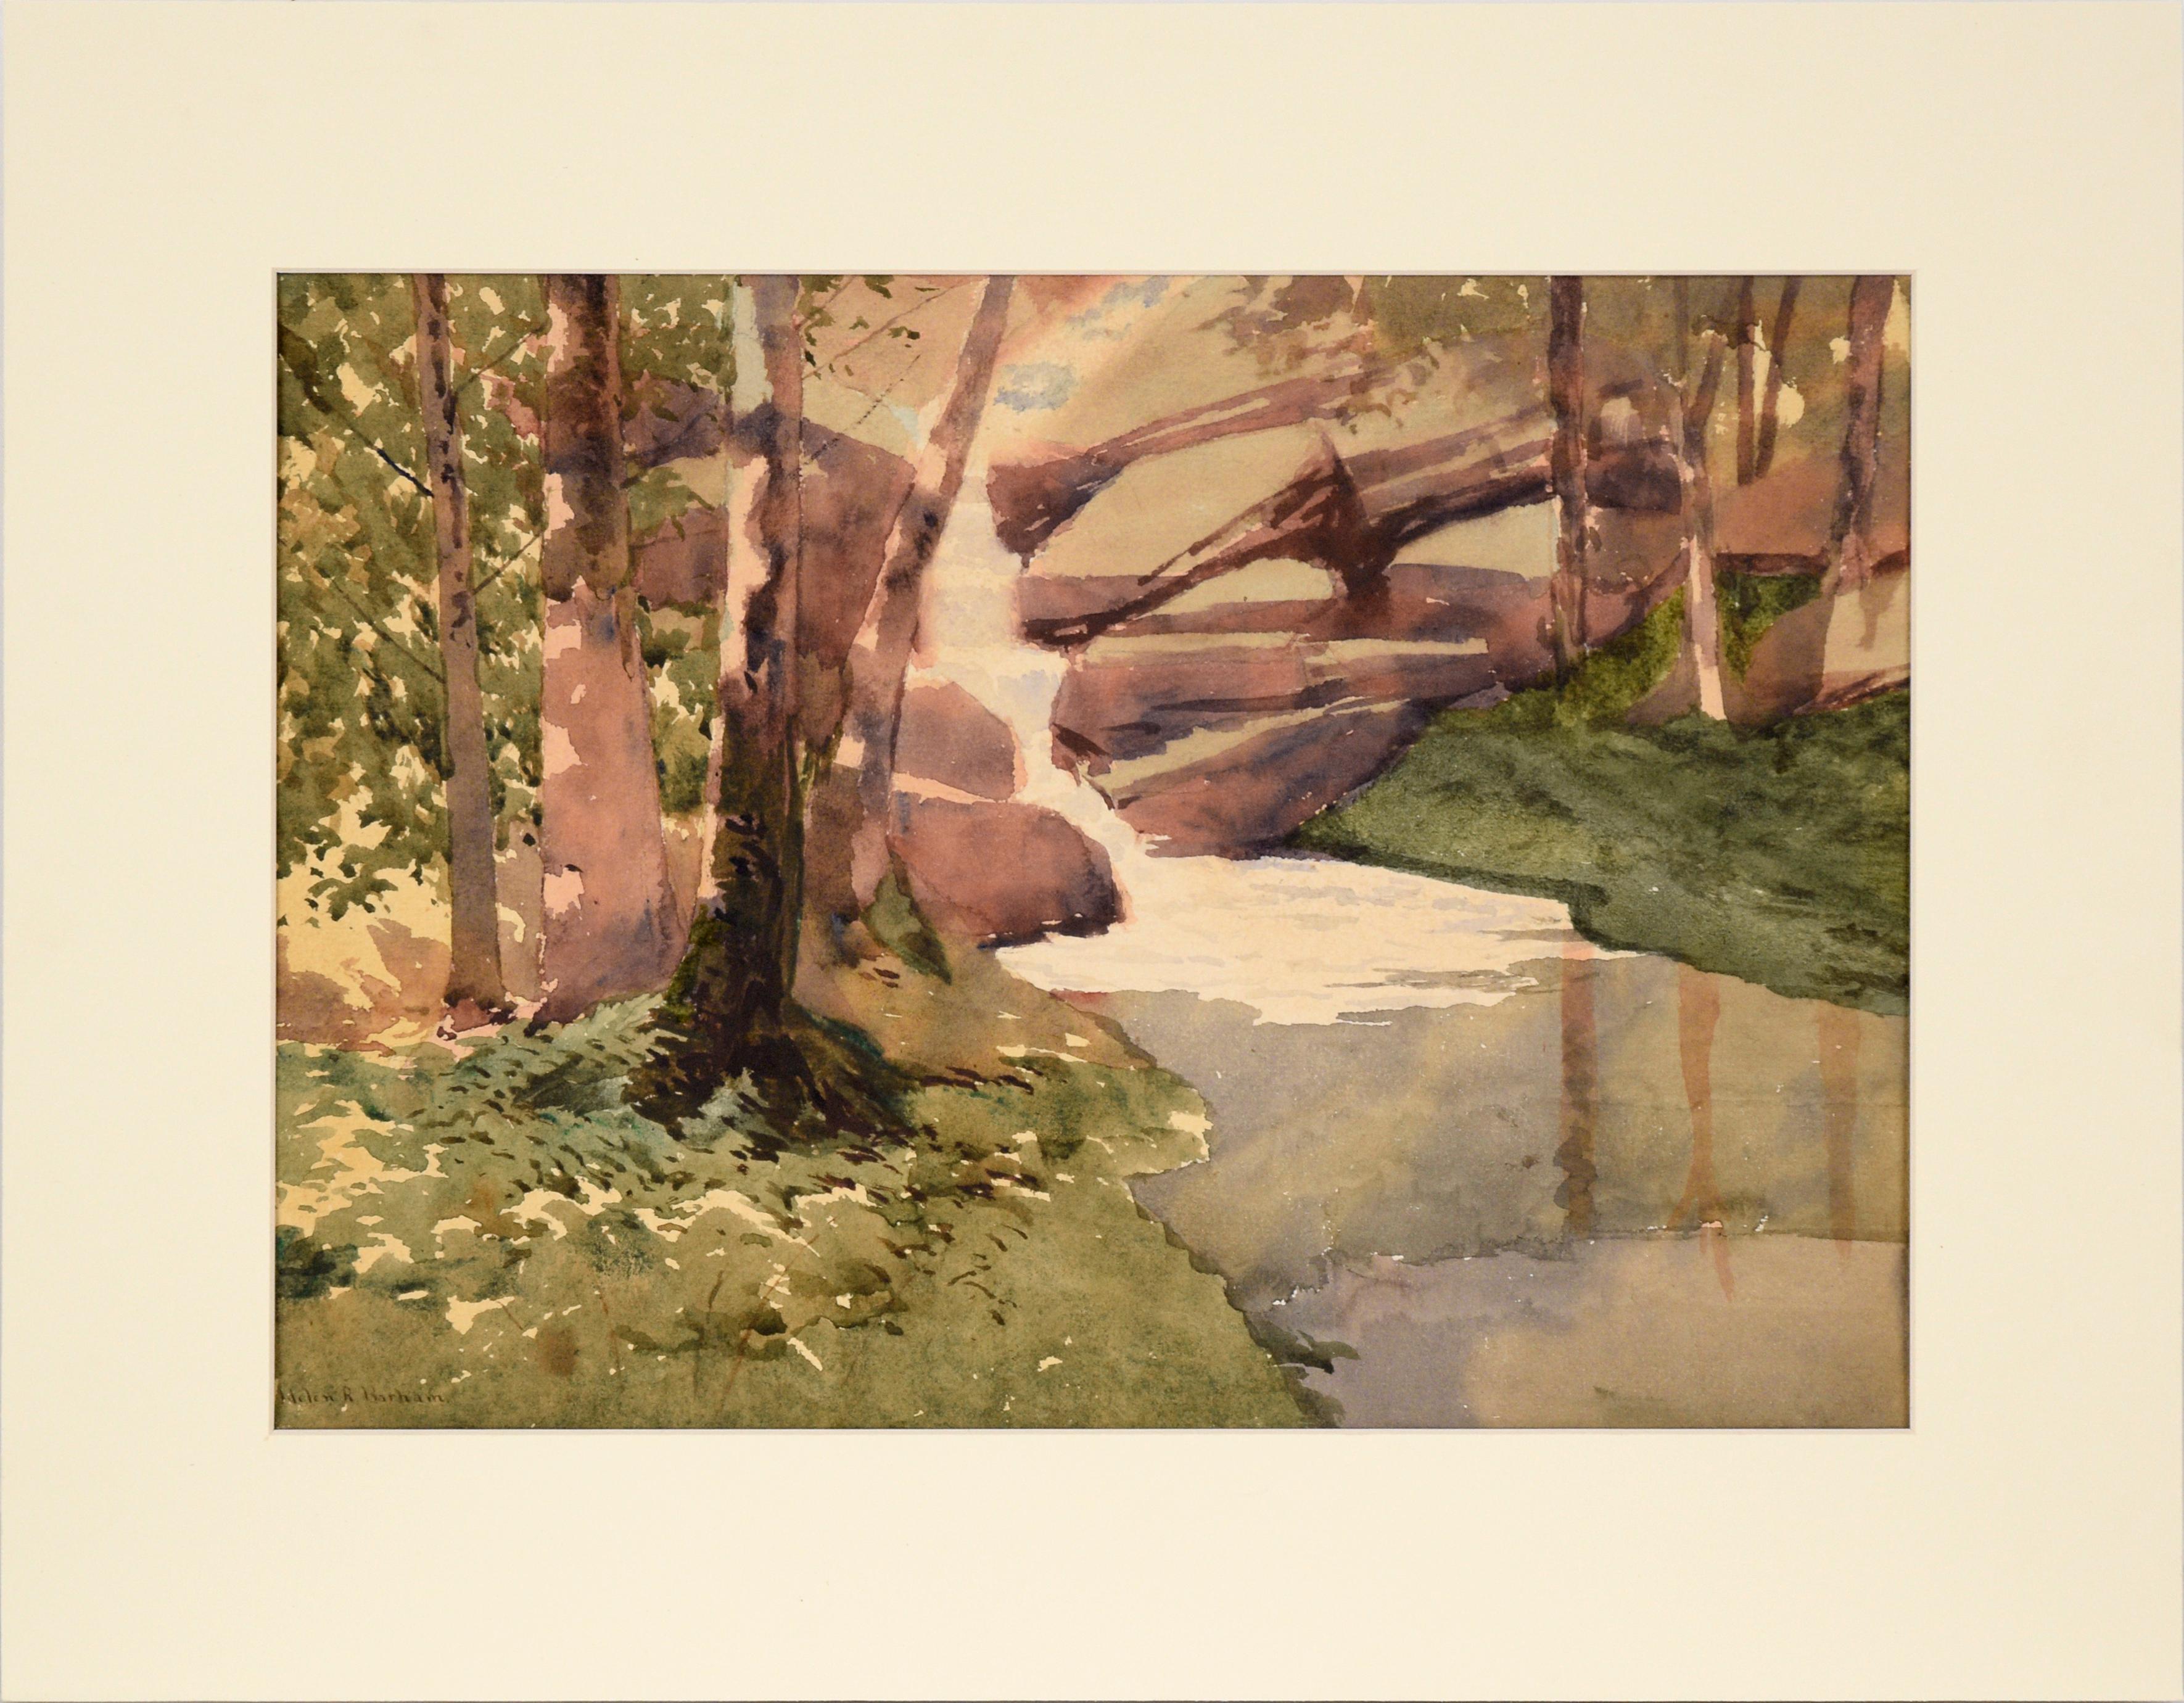 Helen R. Barham Landscape Art - Cascading Stream in the Woods - Watercolor Landscape on Paper